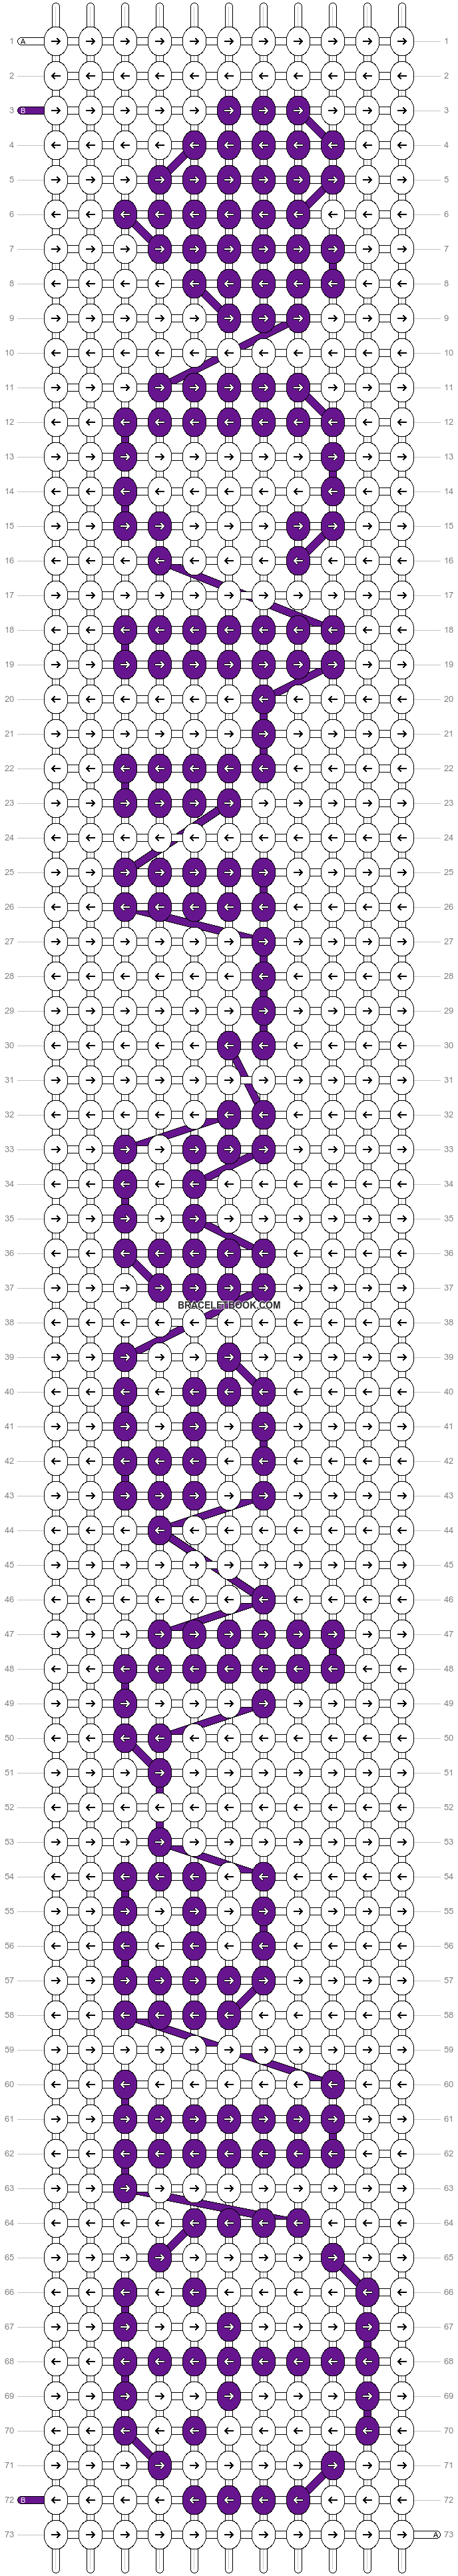 Alpha pattern #5015 pattern